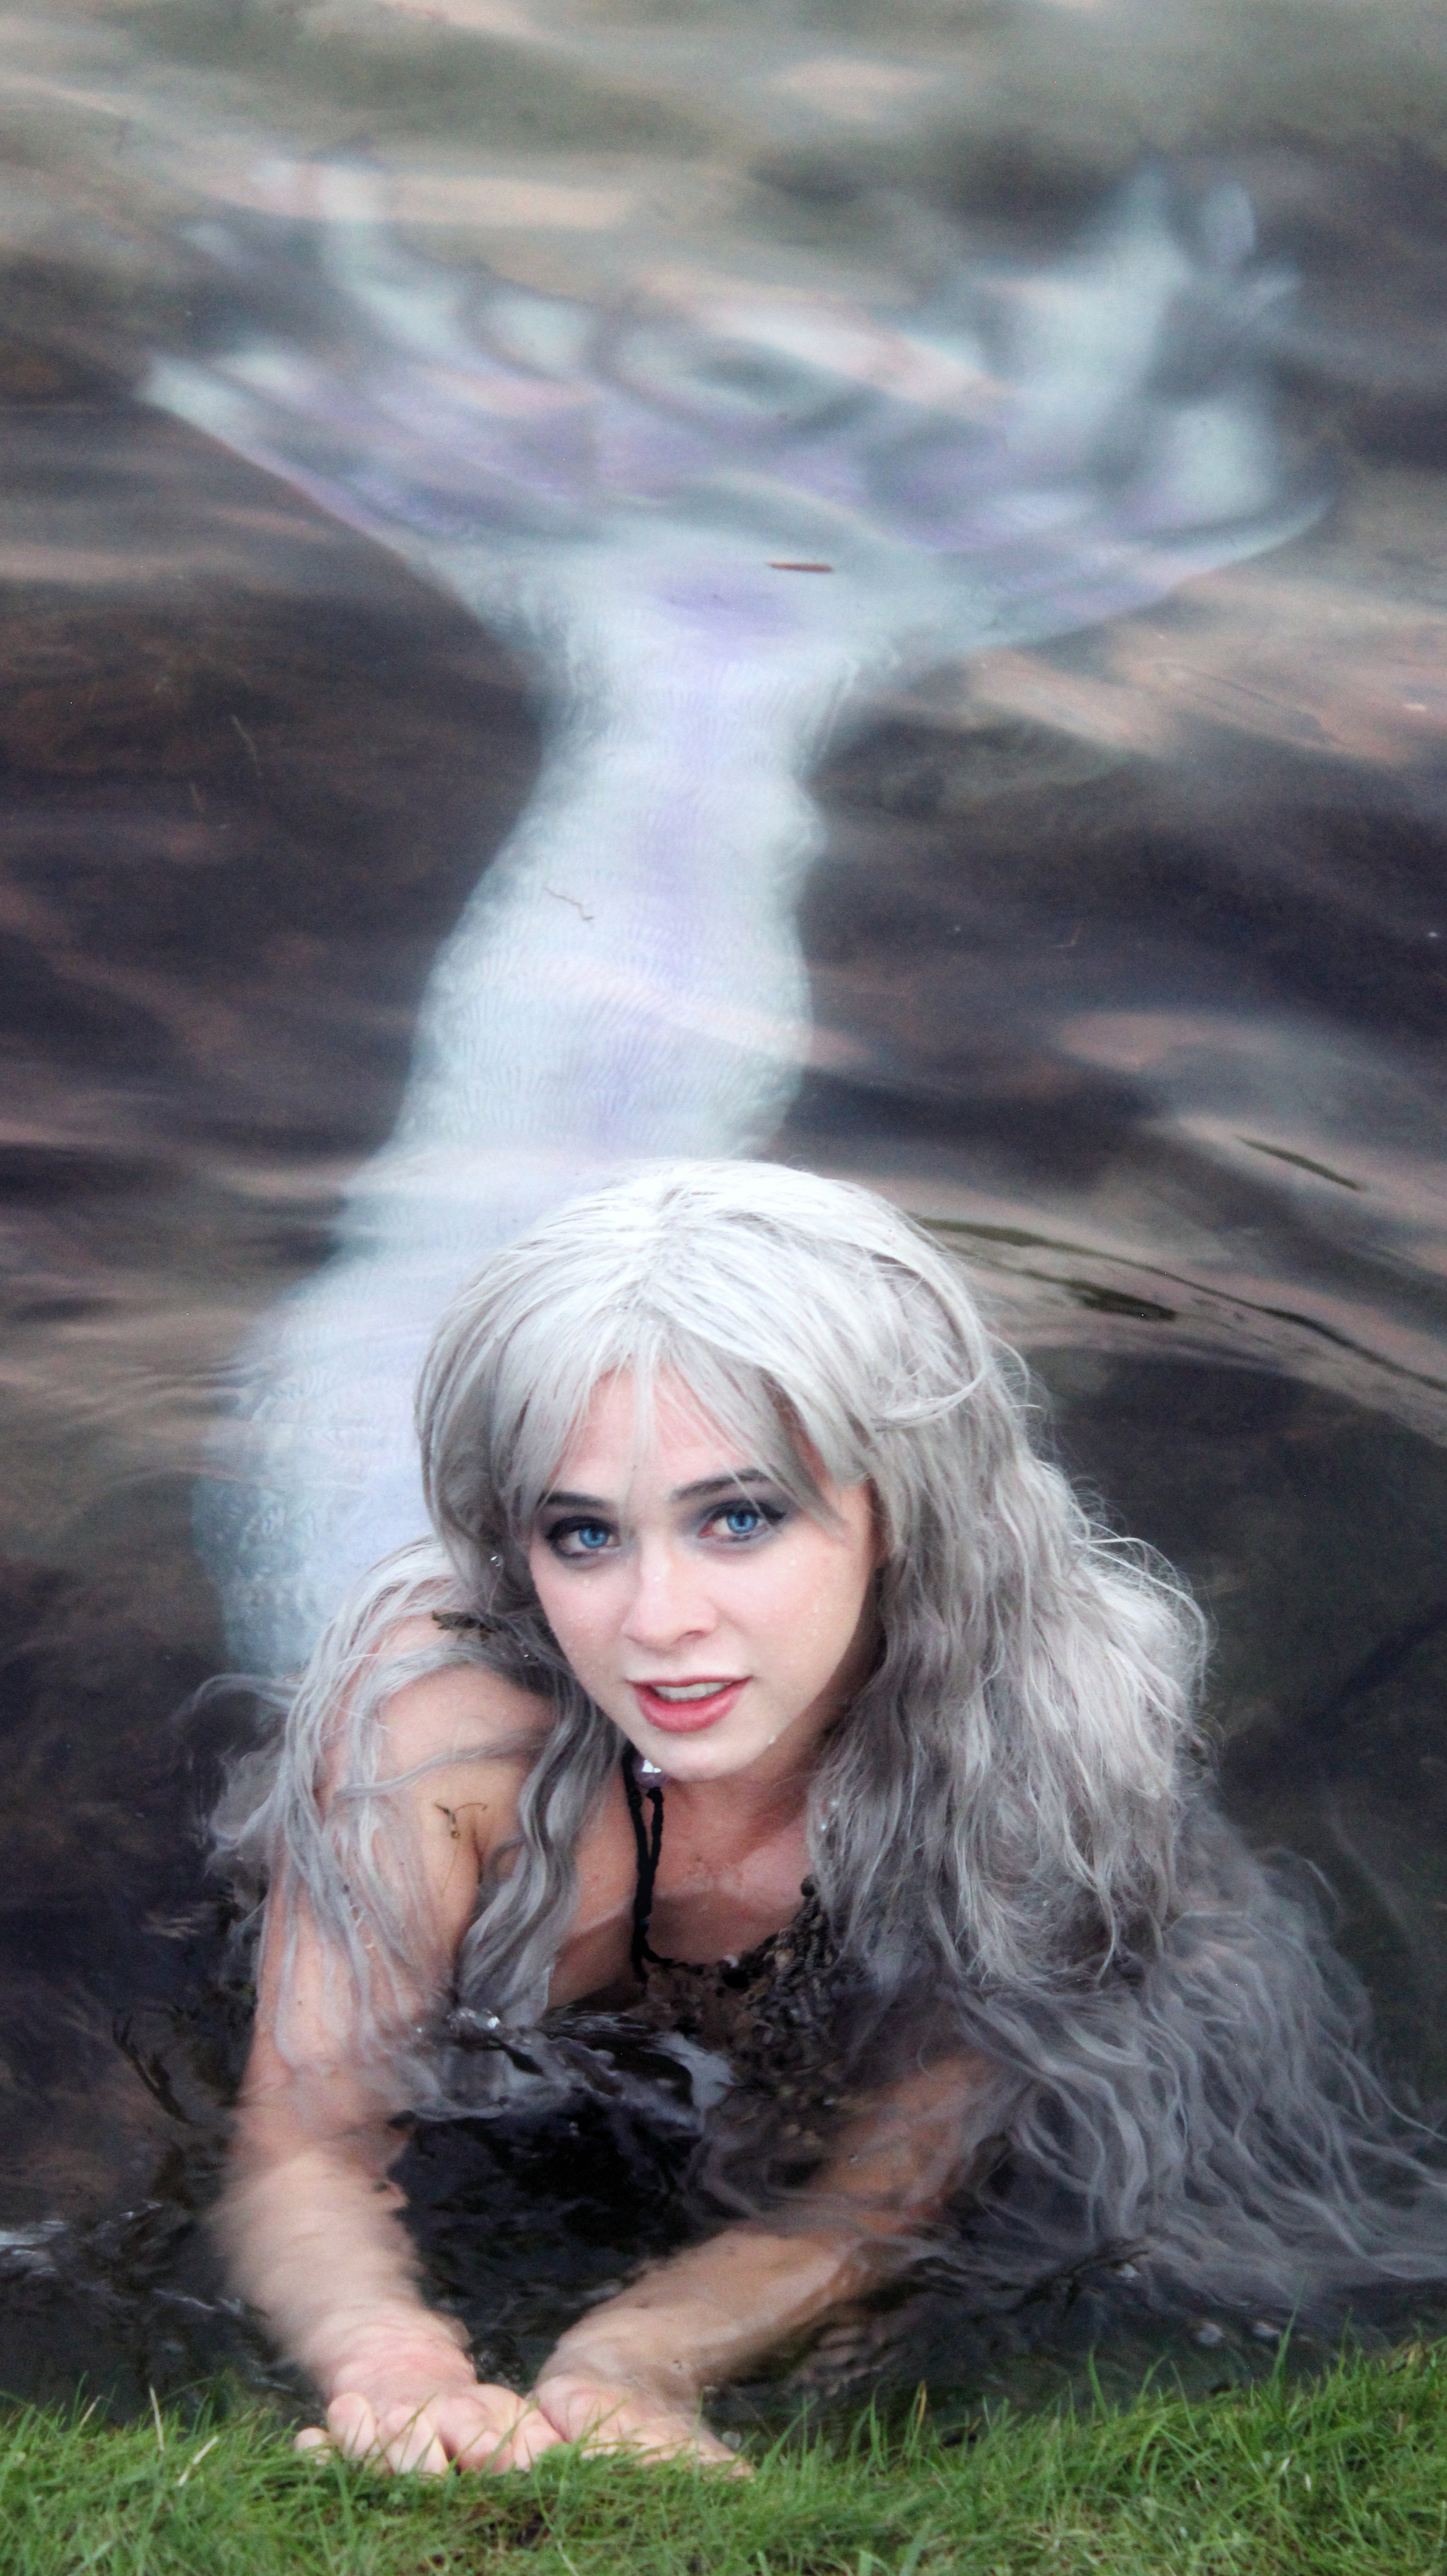 Mermaid-Phantom-in-the-grass-edit-themagiccrafter-PURPLE.jpg